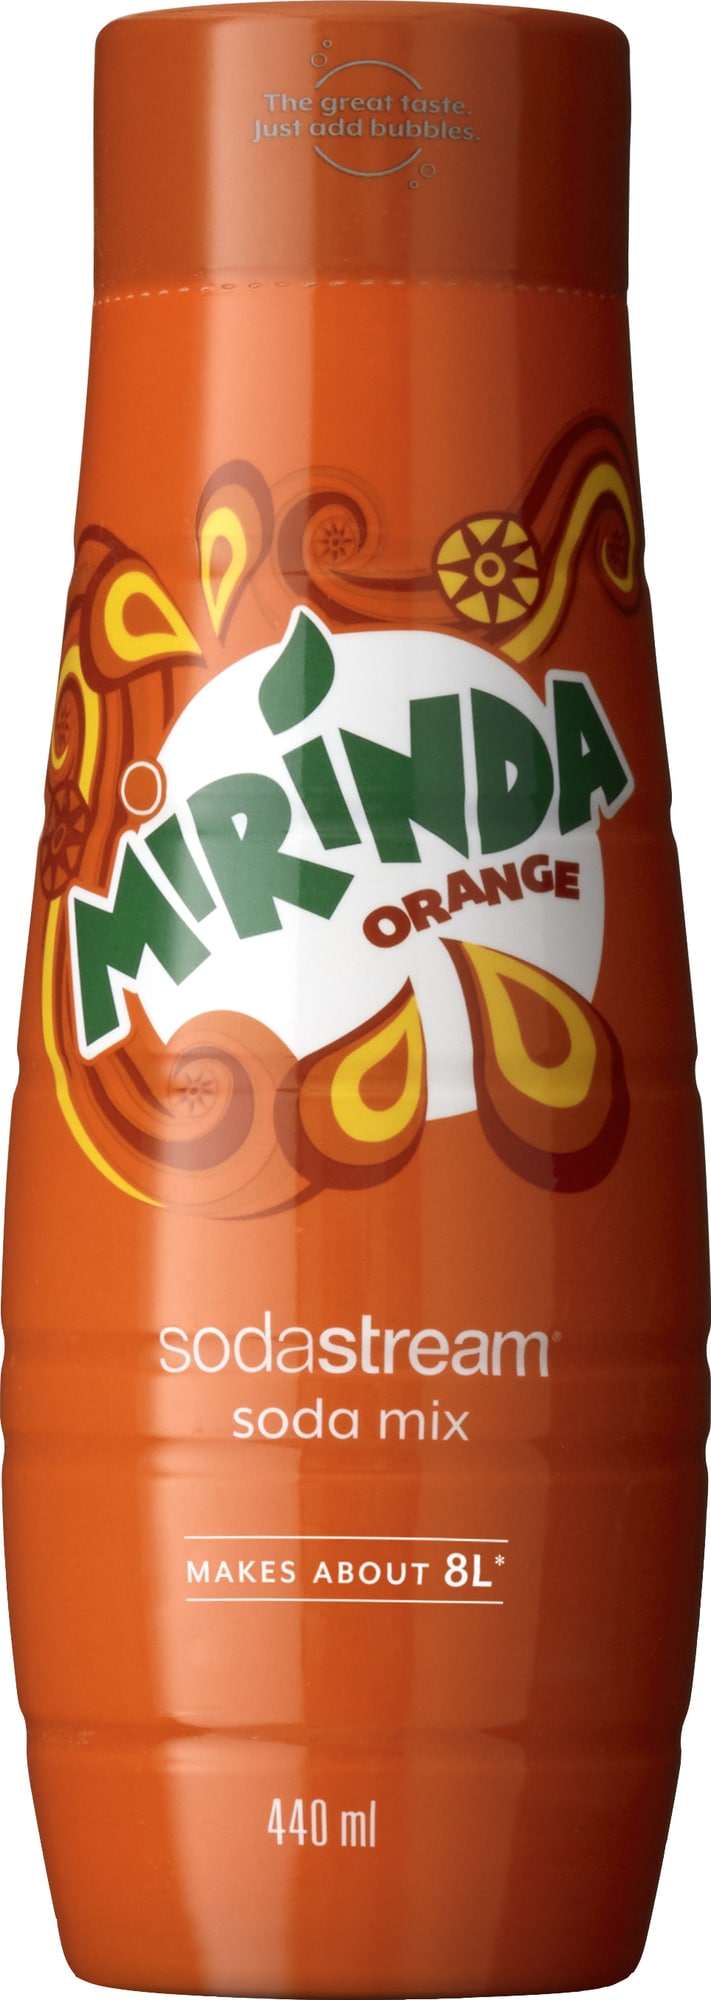 Sodastream Miranda smagsekstrakt thumbnail